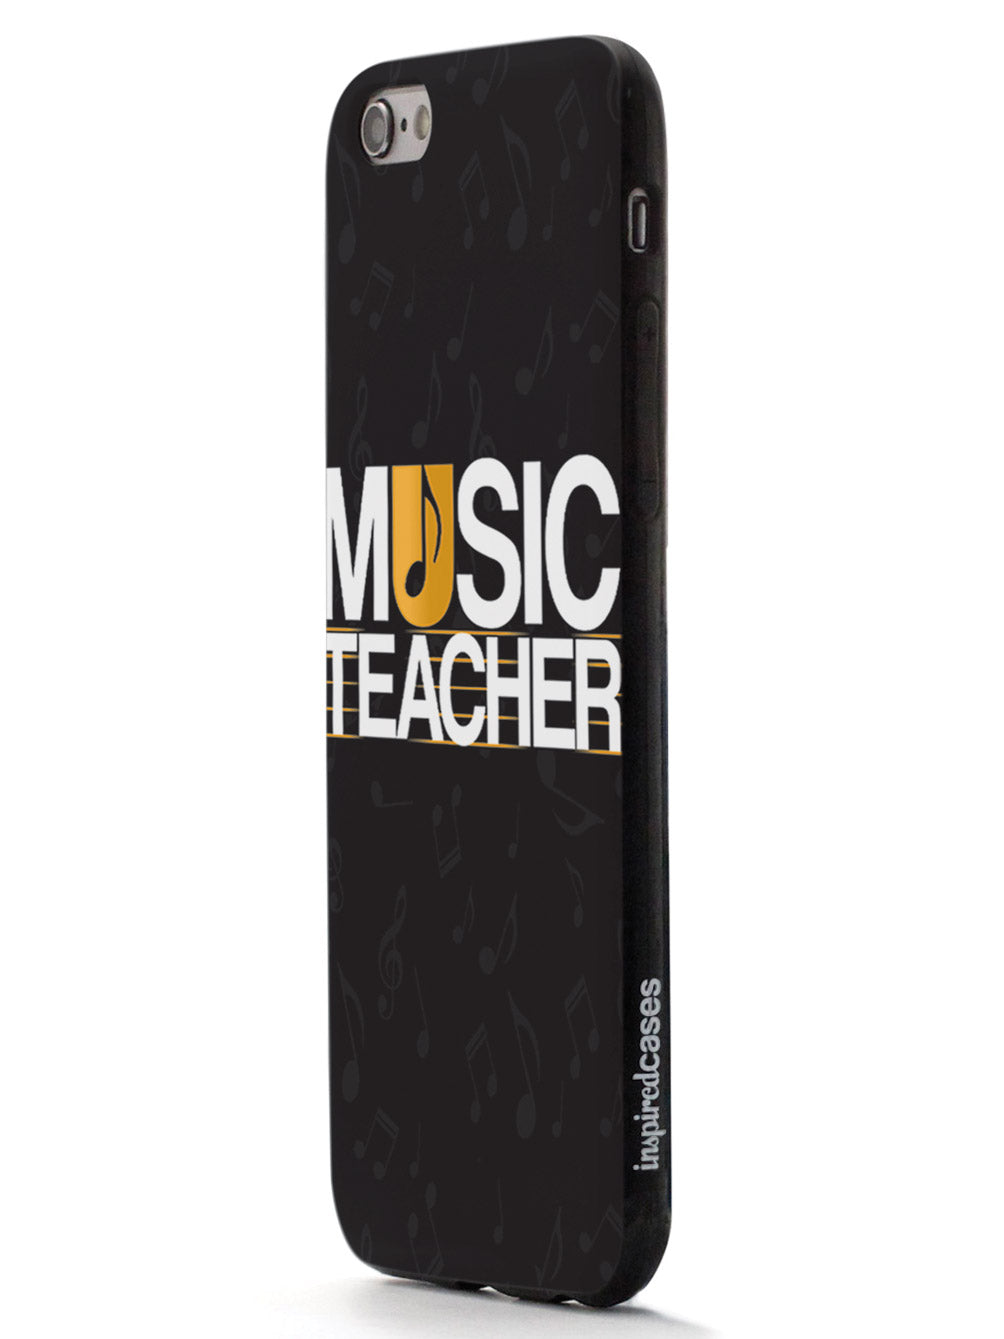 Music Teacher Case